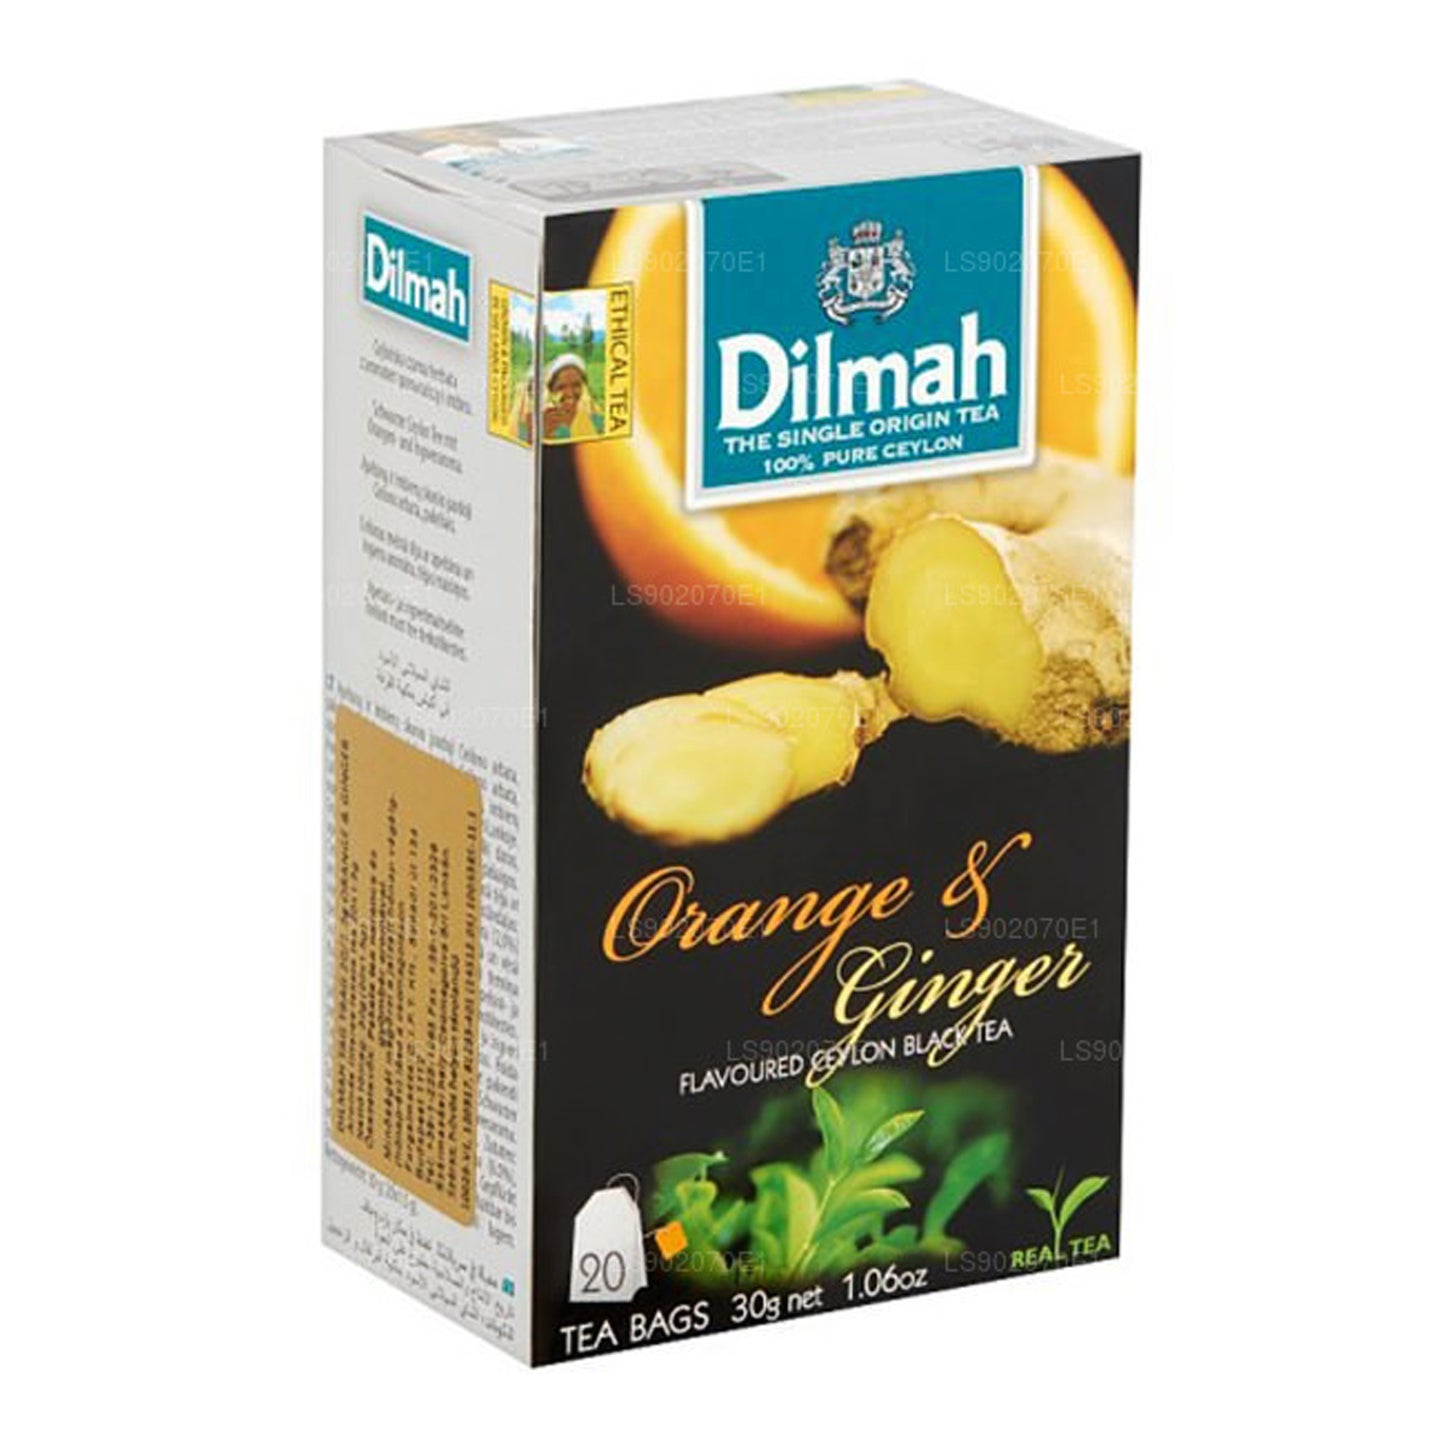 Dilmah Orange and Ginger Flavored Tea (30g) 20 Tea Bags